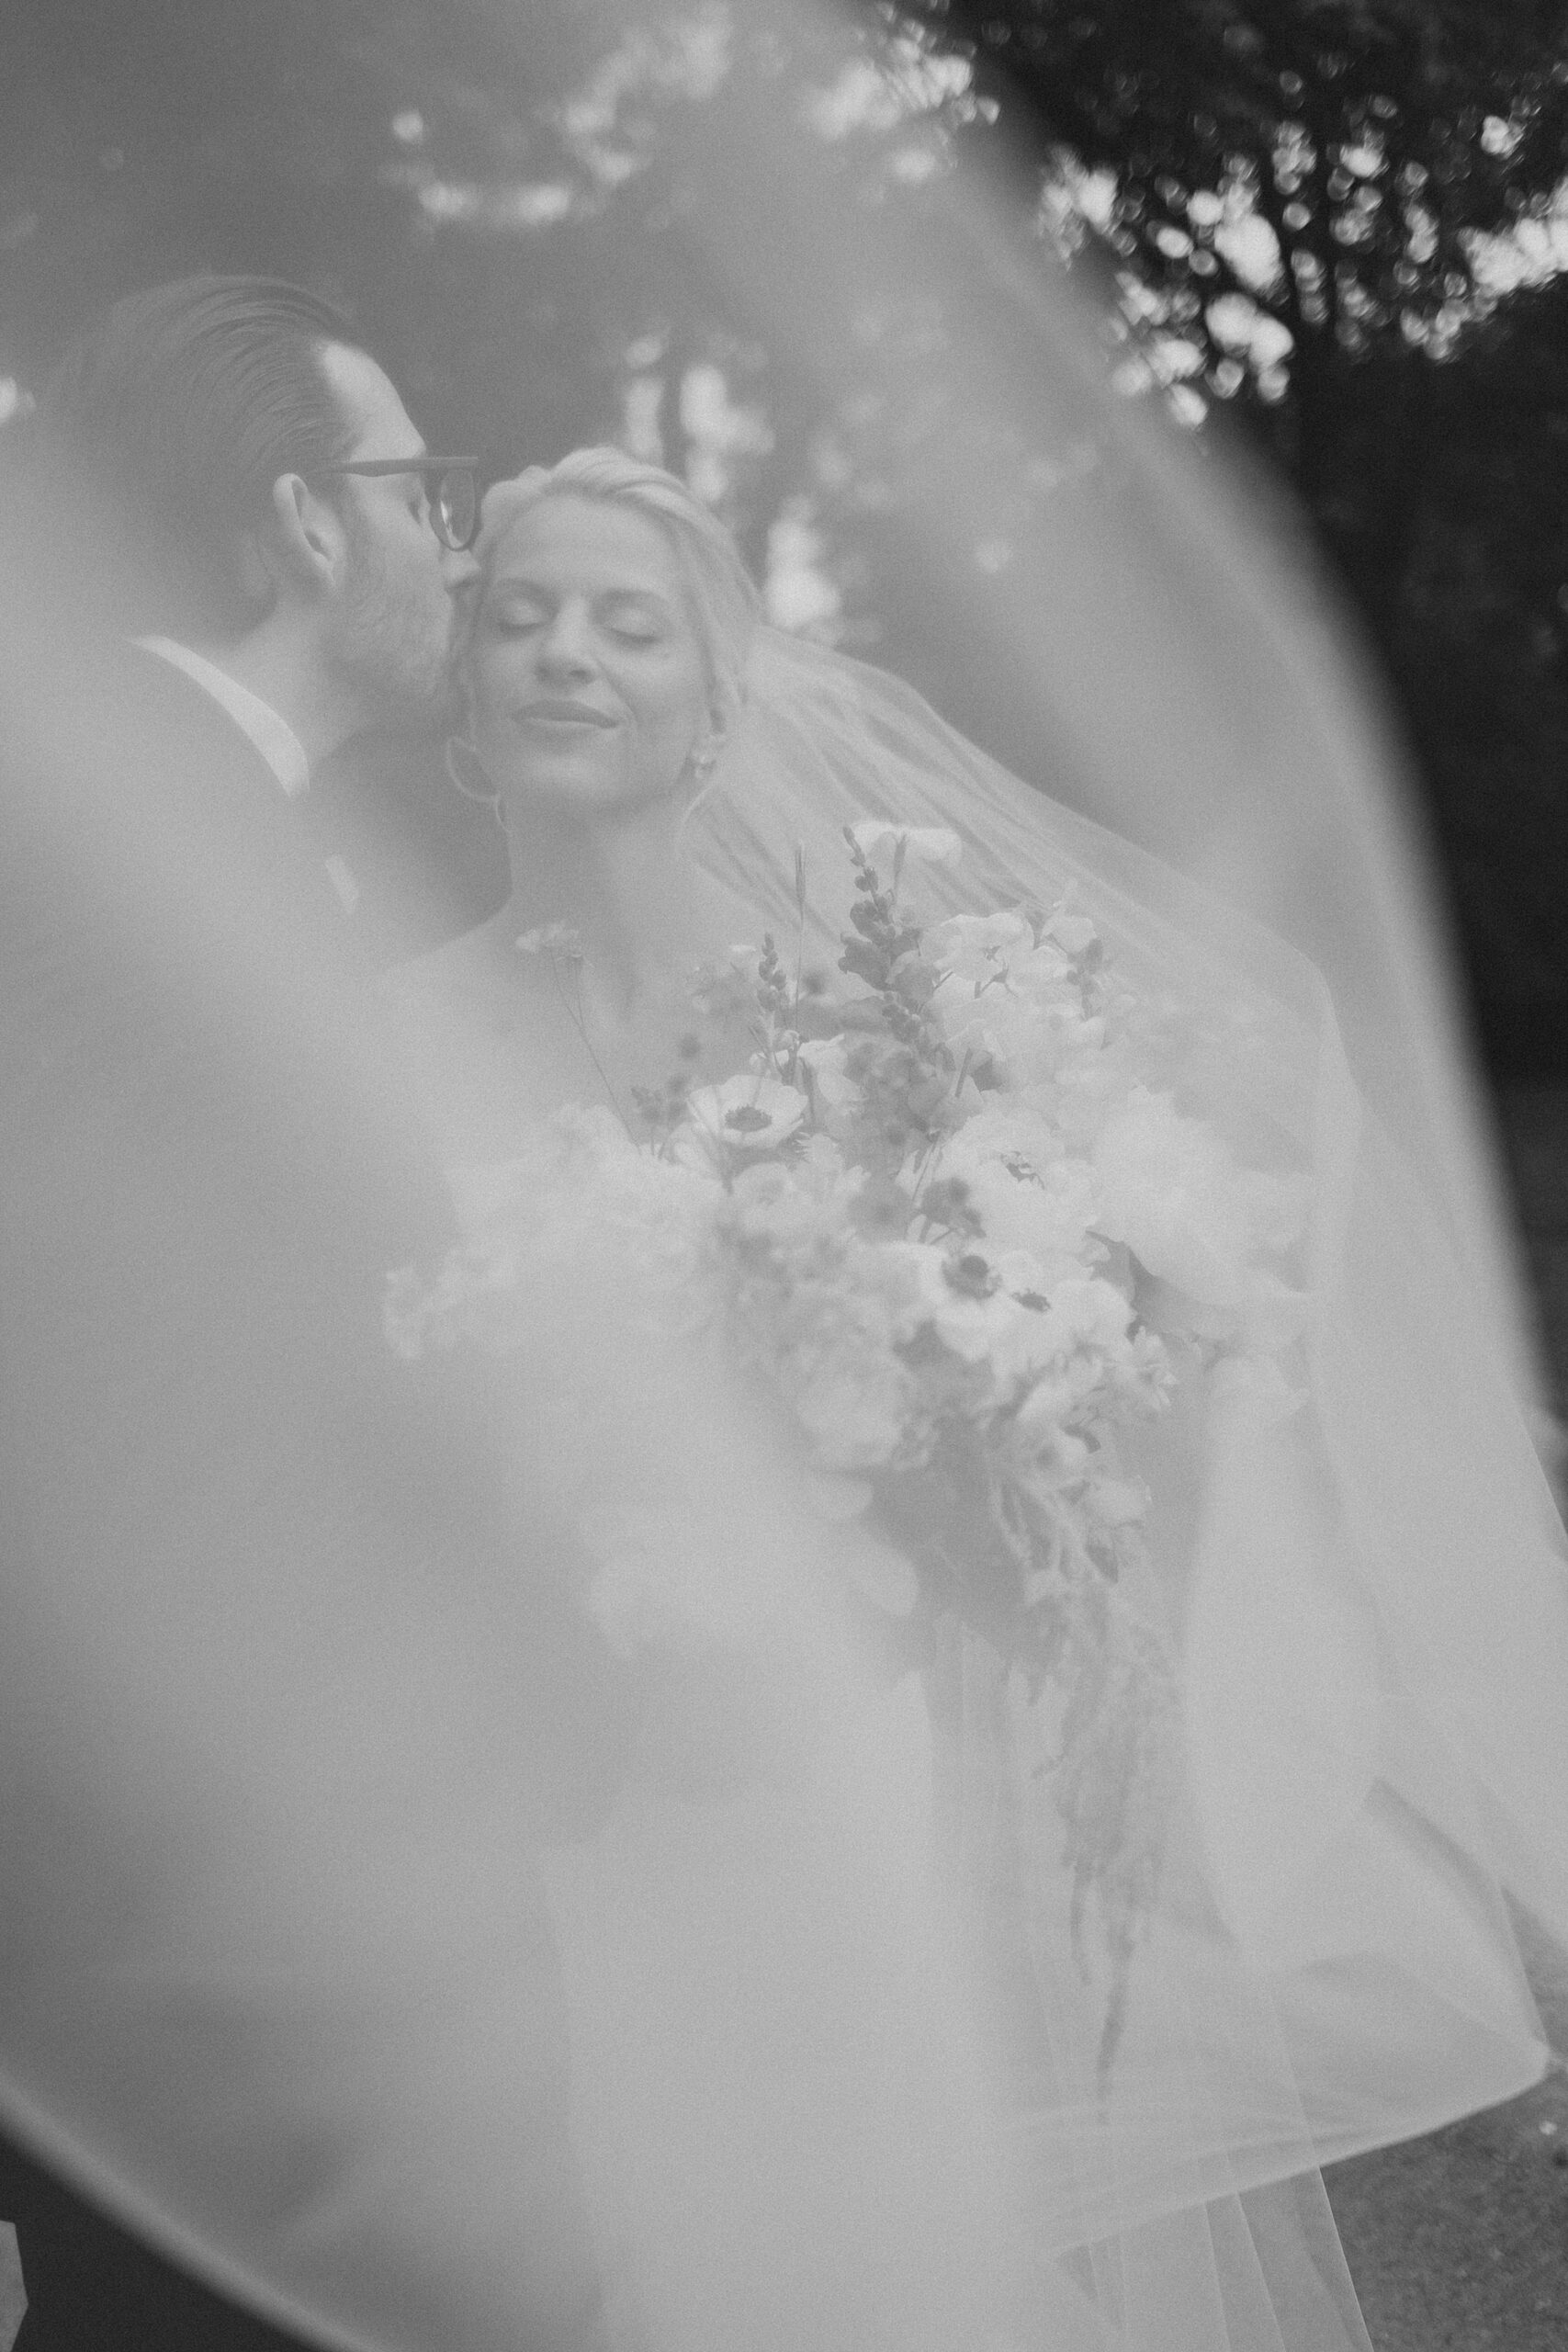 bride and groom kiss in photo taken through bride's veil